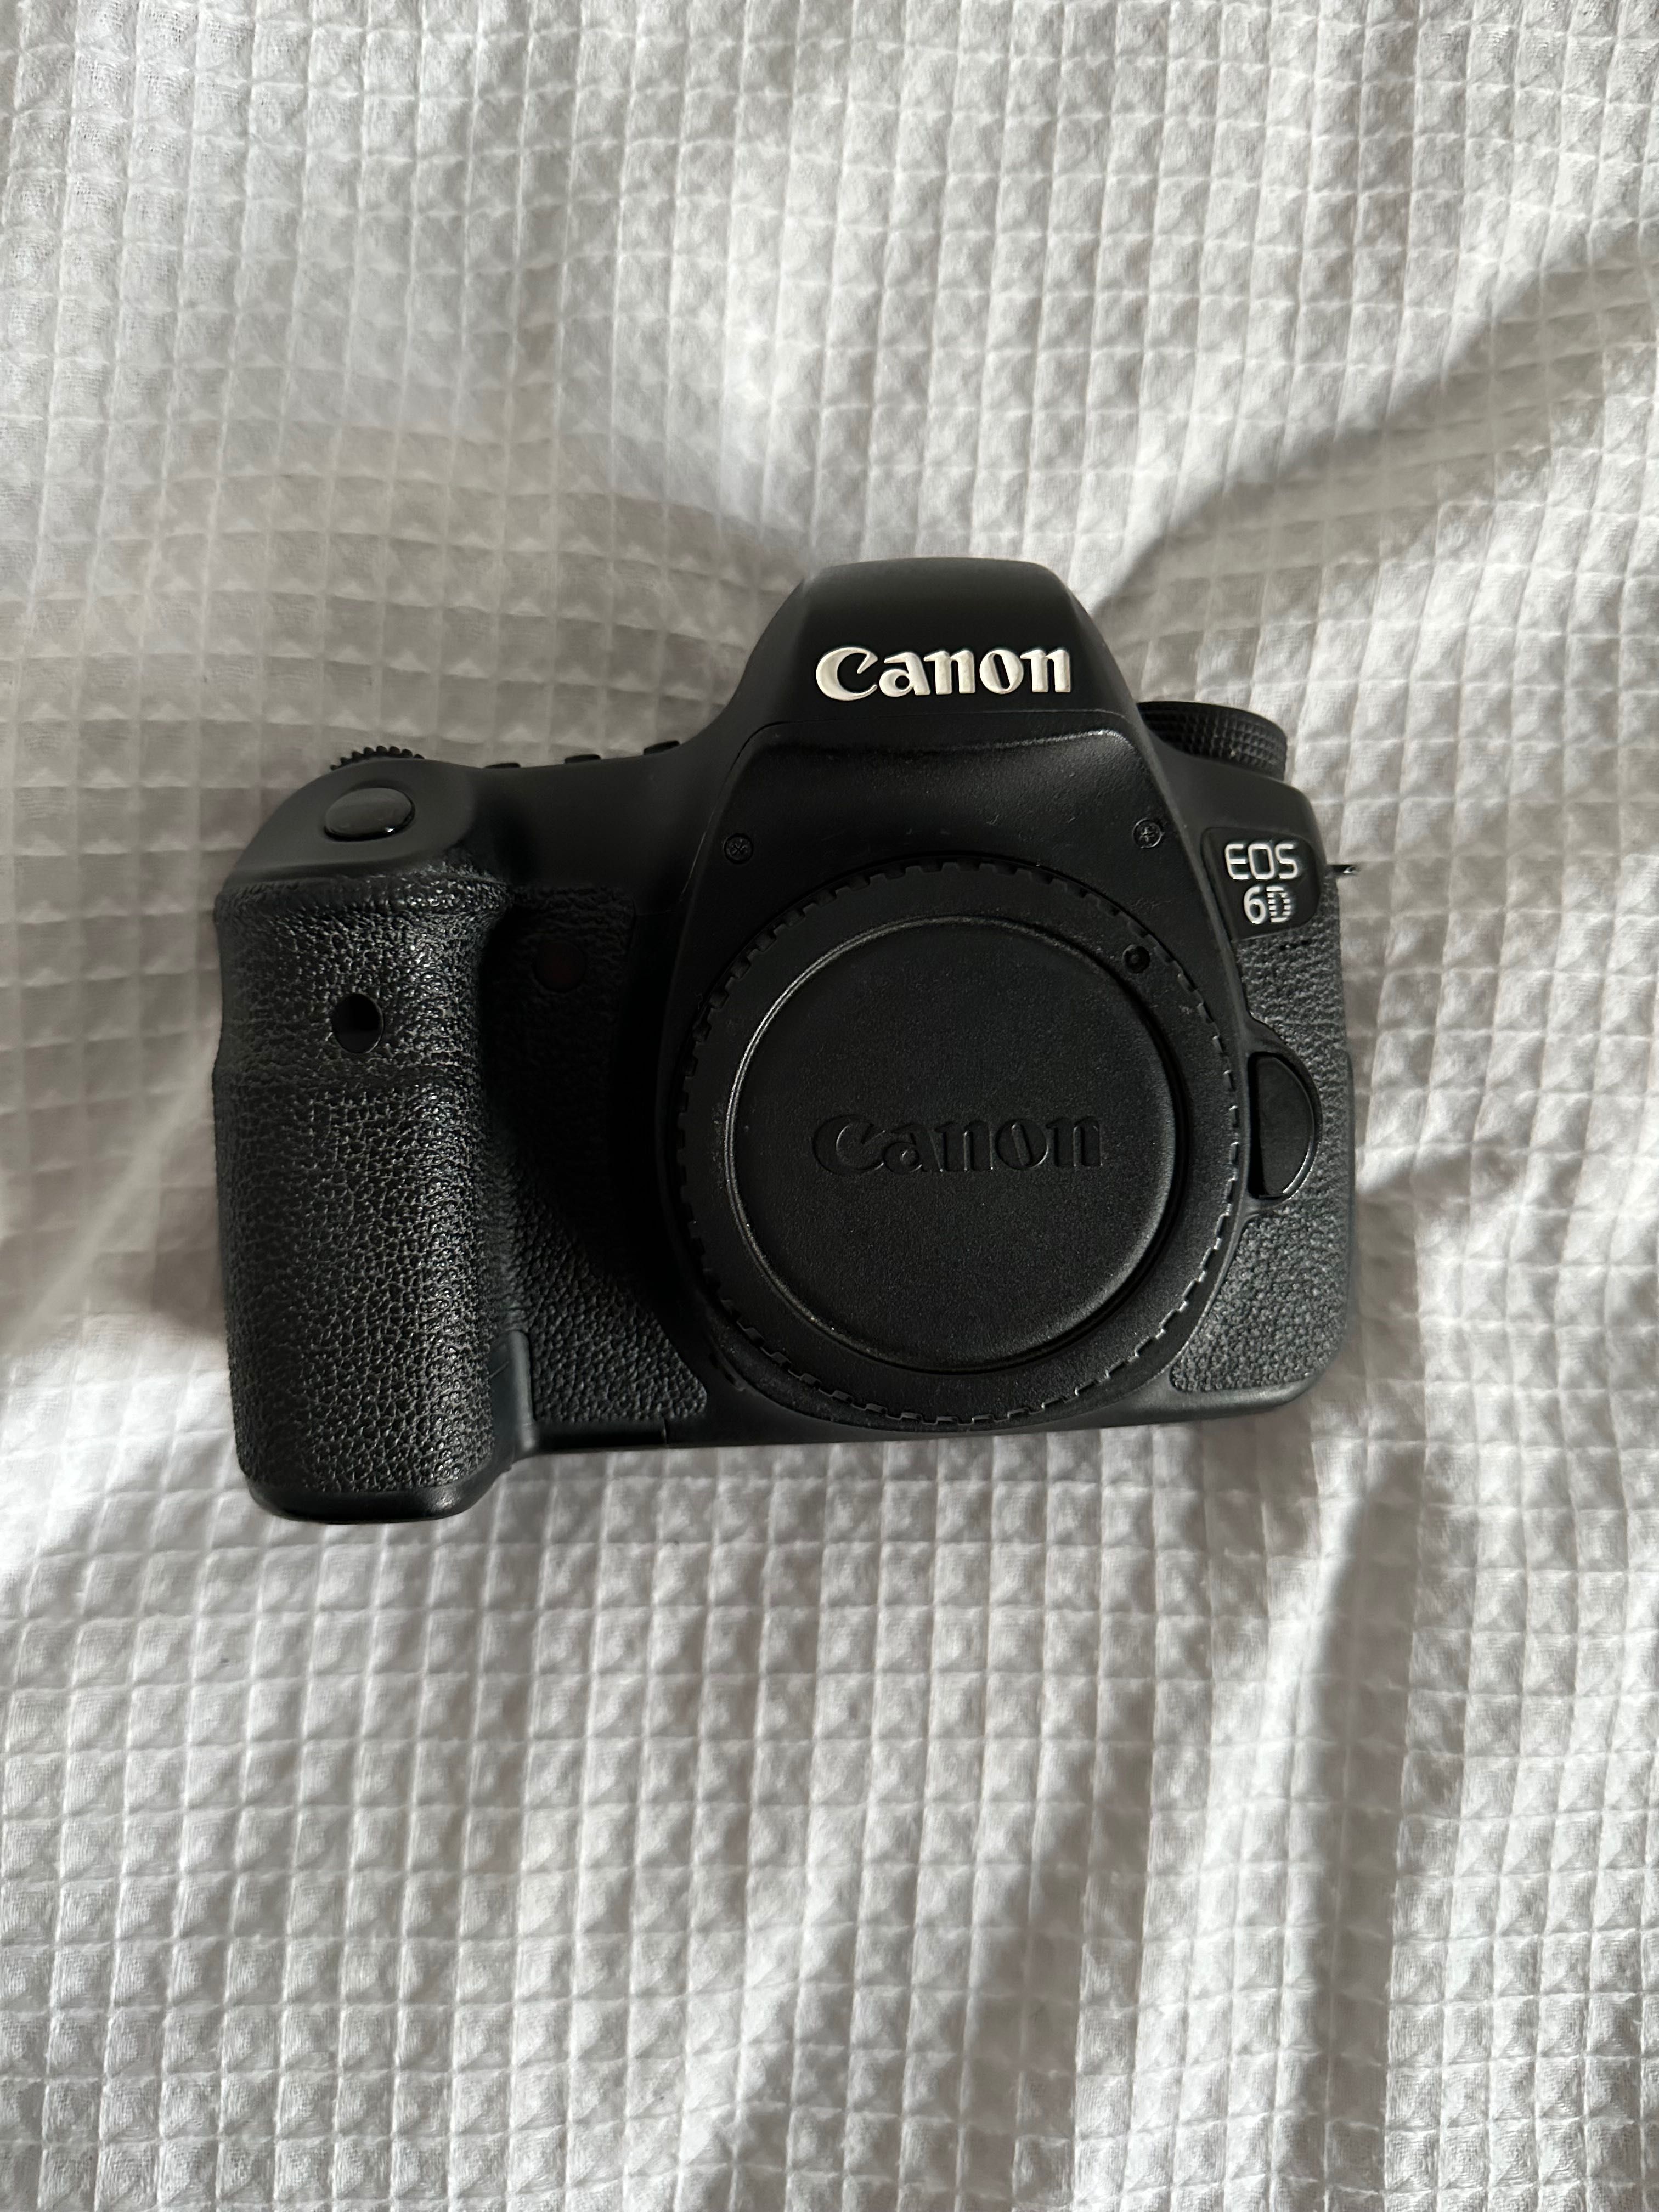 Canon 6d(WI-FI GPS)